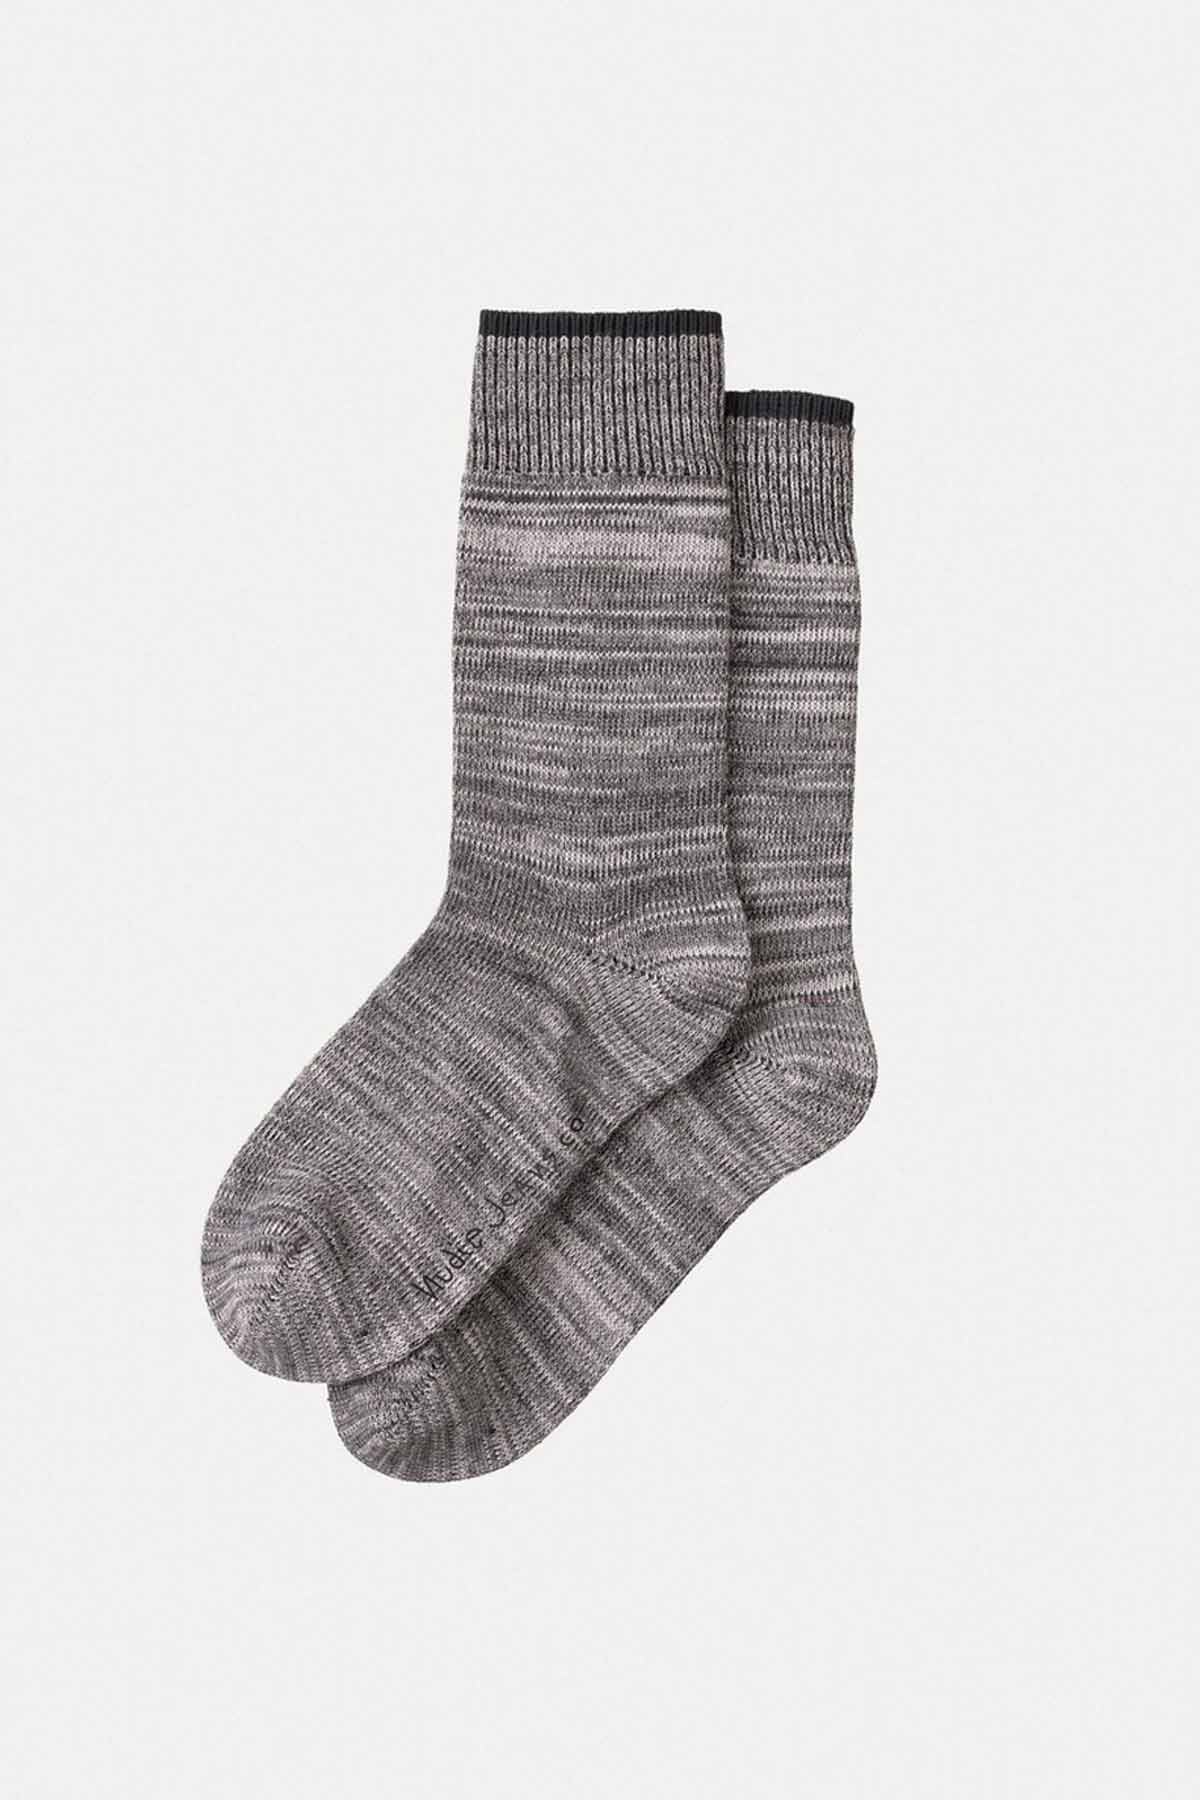 Chaussettes Rasmusson Multi Yarn Socks - Nudie Jeans